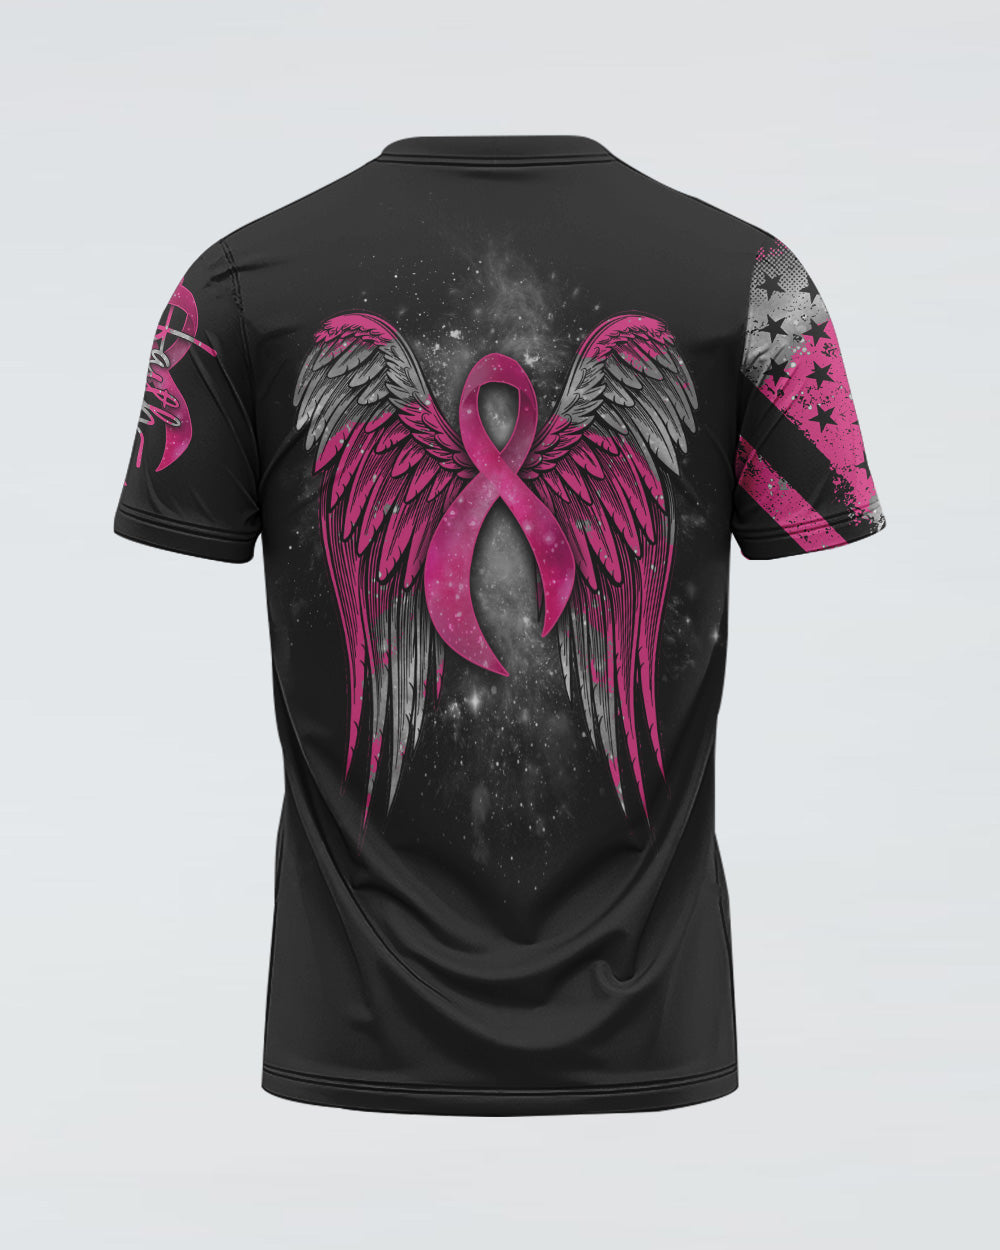 Wings Ribbon Women's Breast Cancer Awareness Tshirt